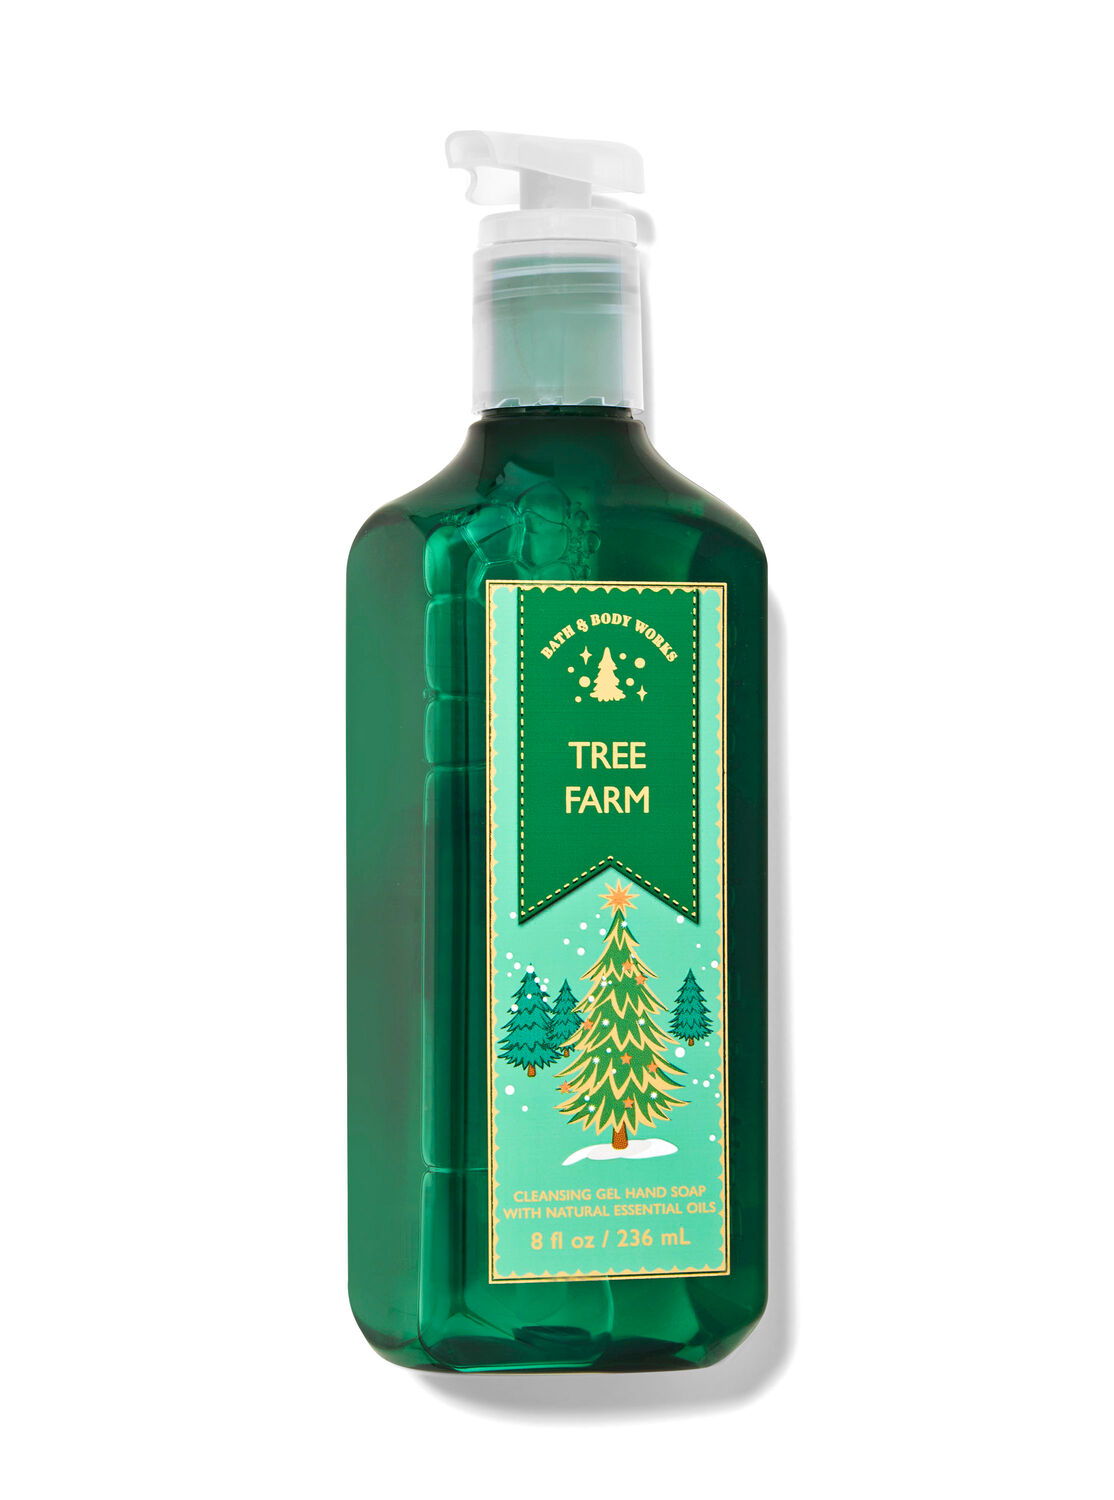 Git Gud Scrub! Soap Ashen One (Tea tree essential oil) – Awa-Piko Soap